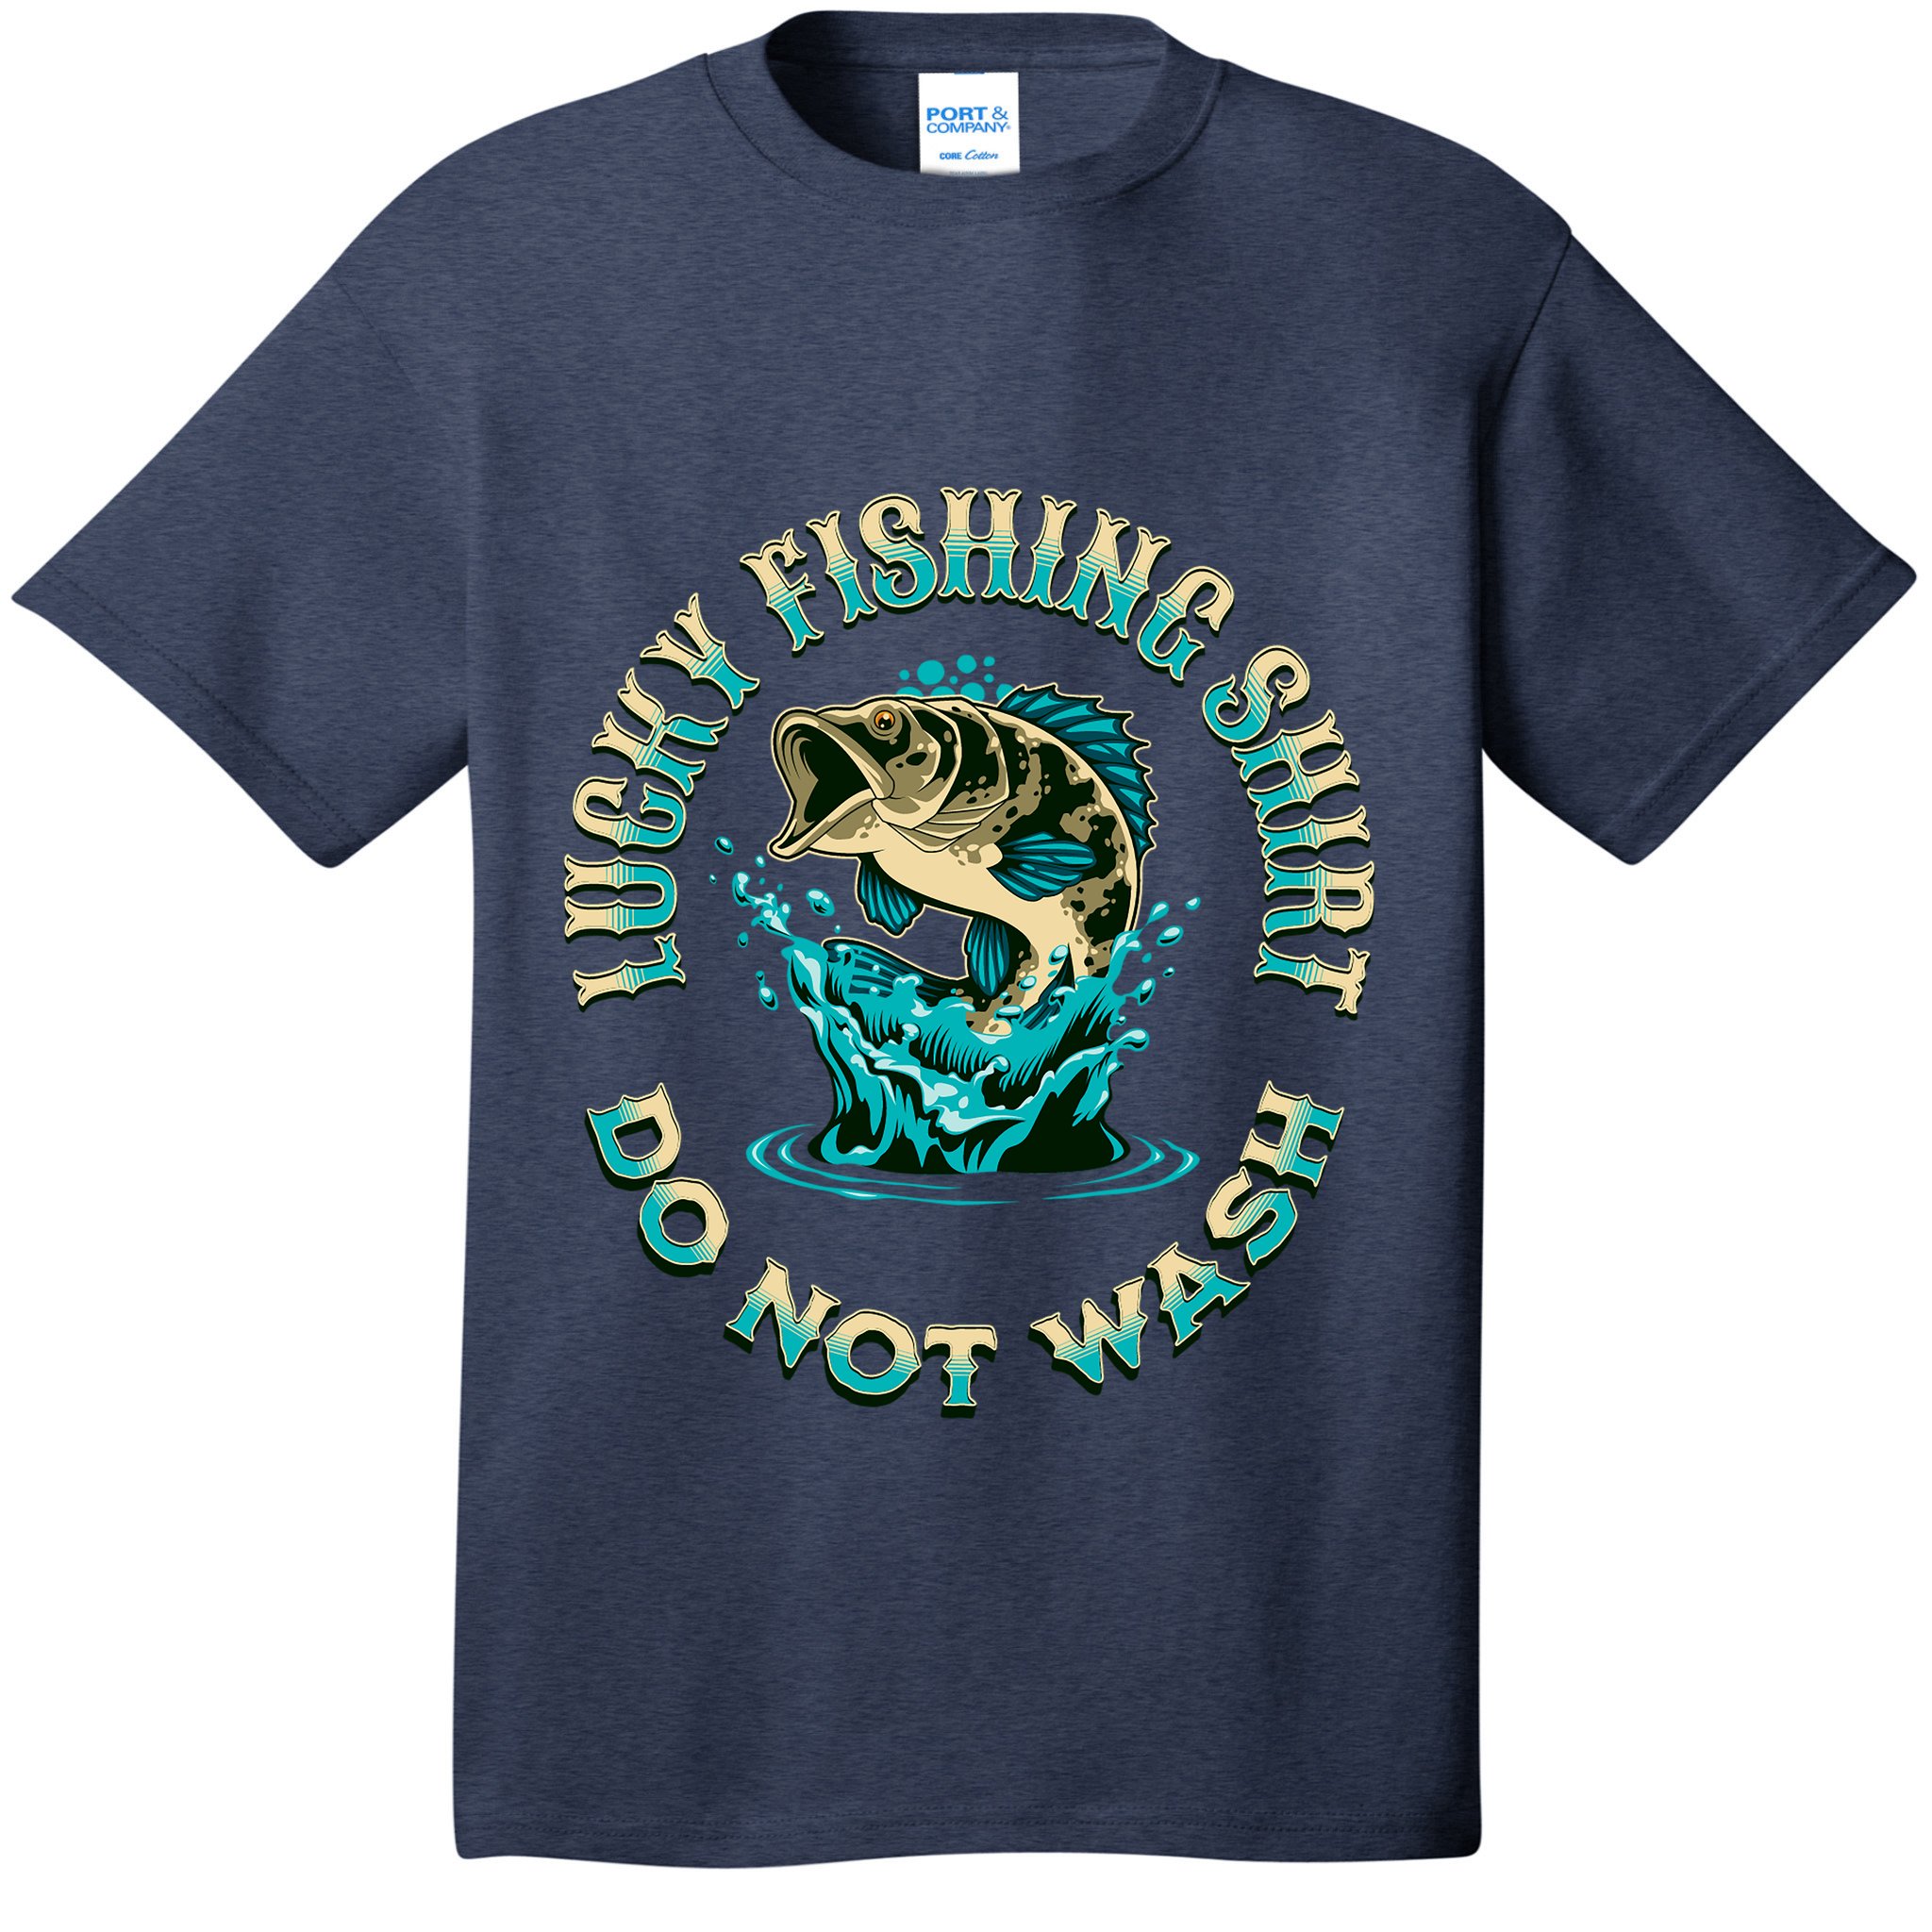 Funny Fishing Memes Funny Fishing Quotes Lucky Fishing Kids Long Sleeve  Shirt